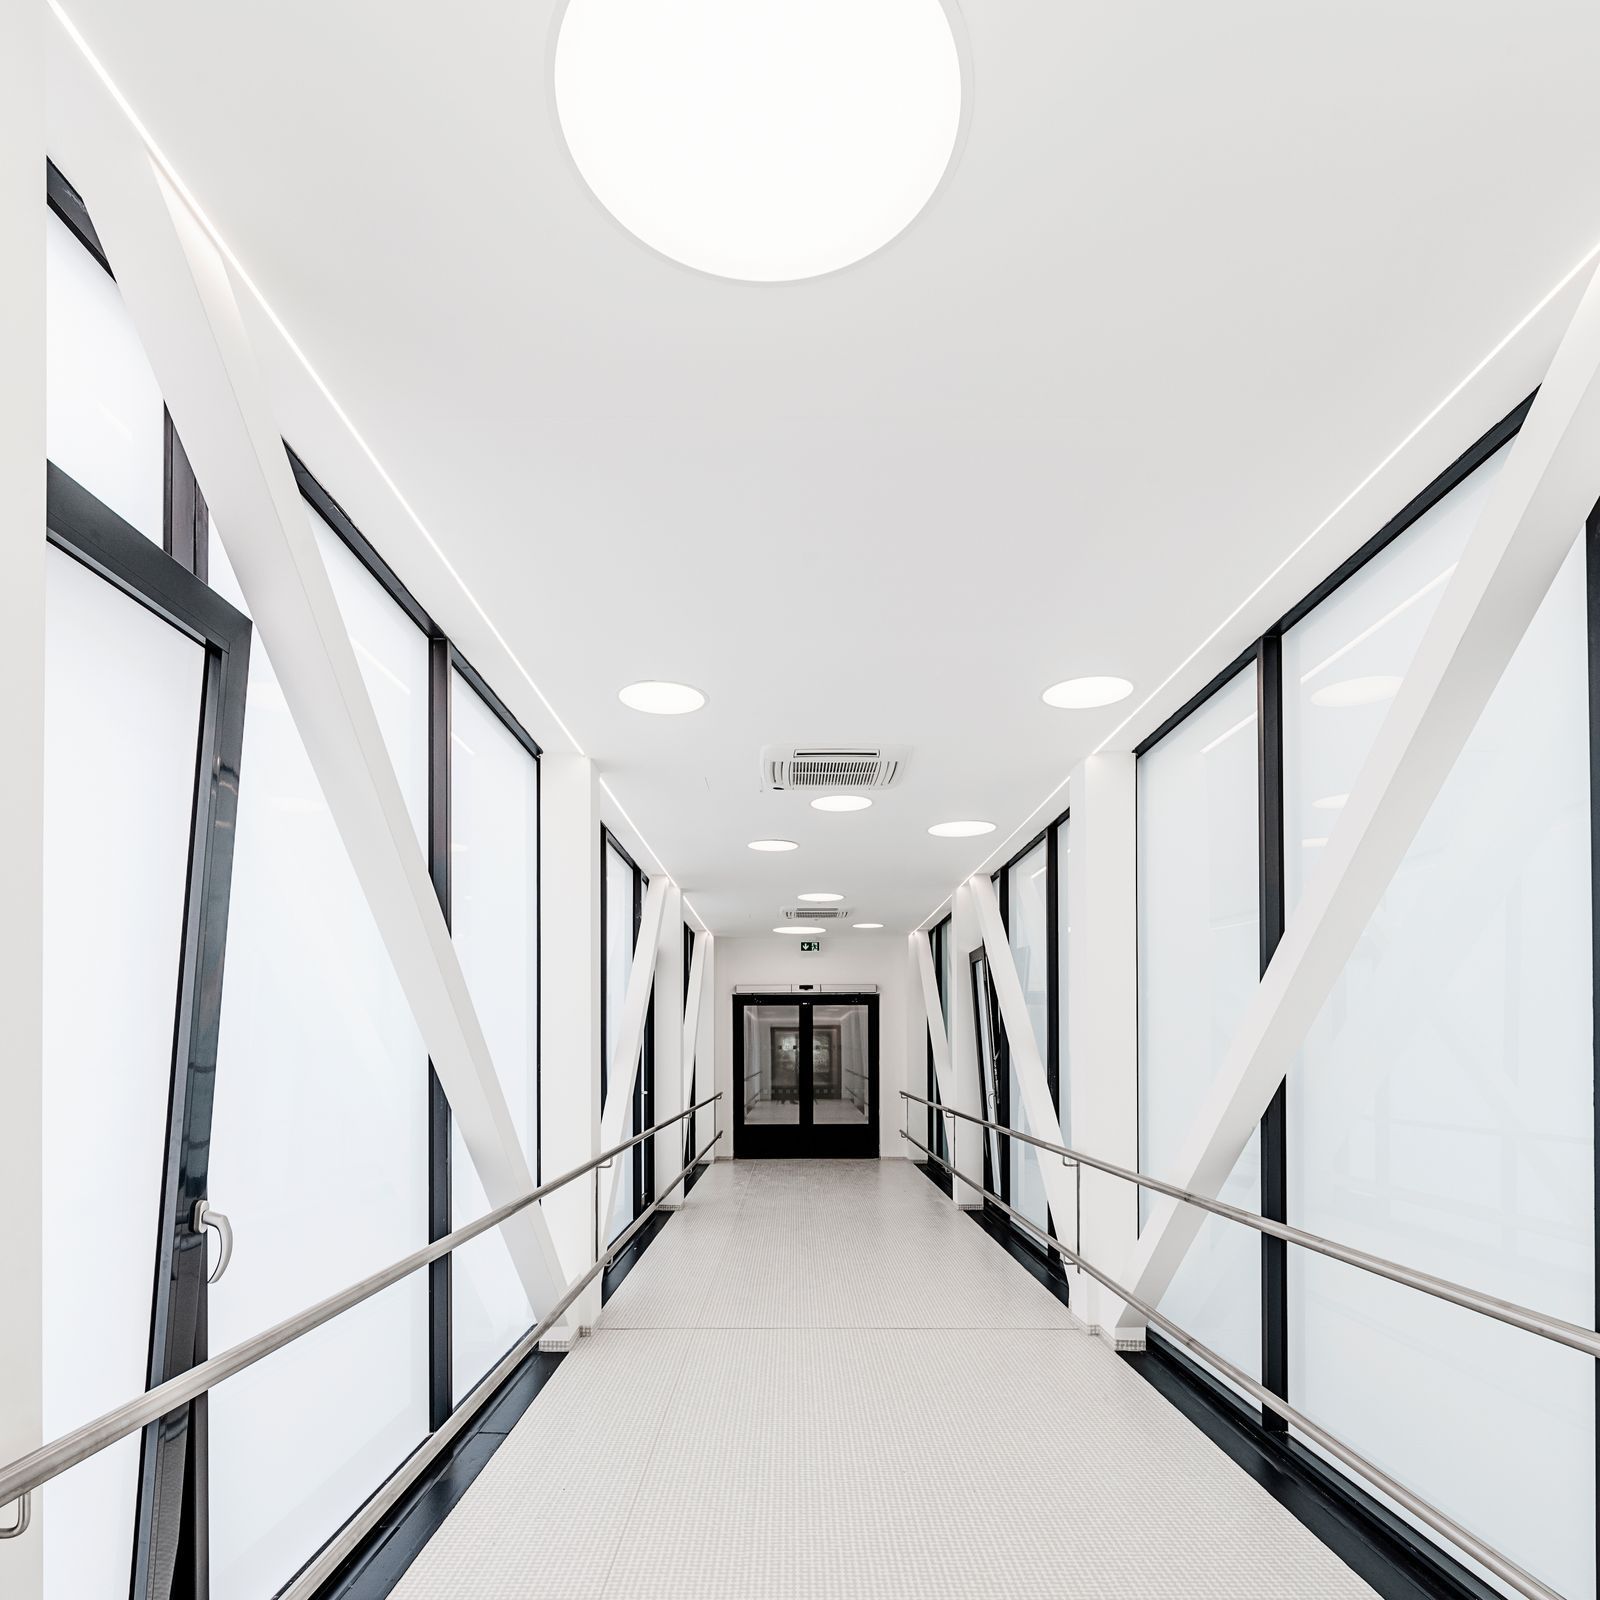 Novostavba II. interní kliniky FN Olomouc podle architekta Adama Rujbra